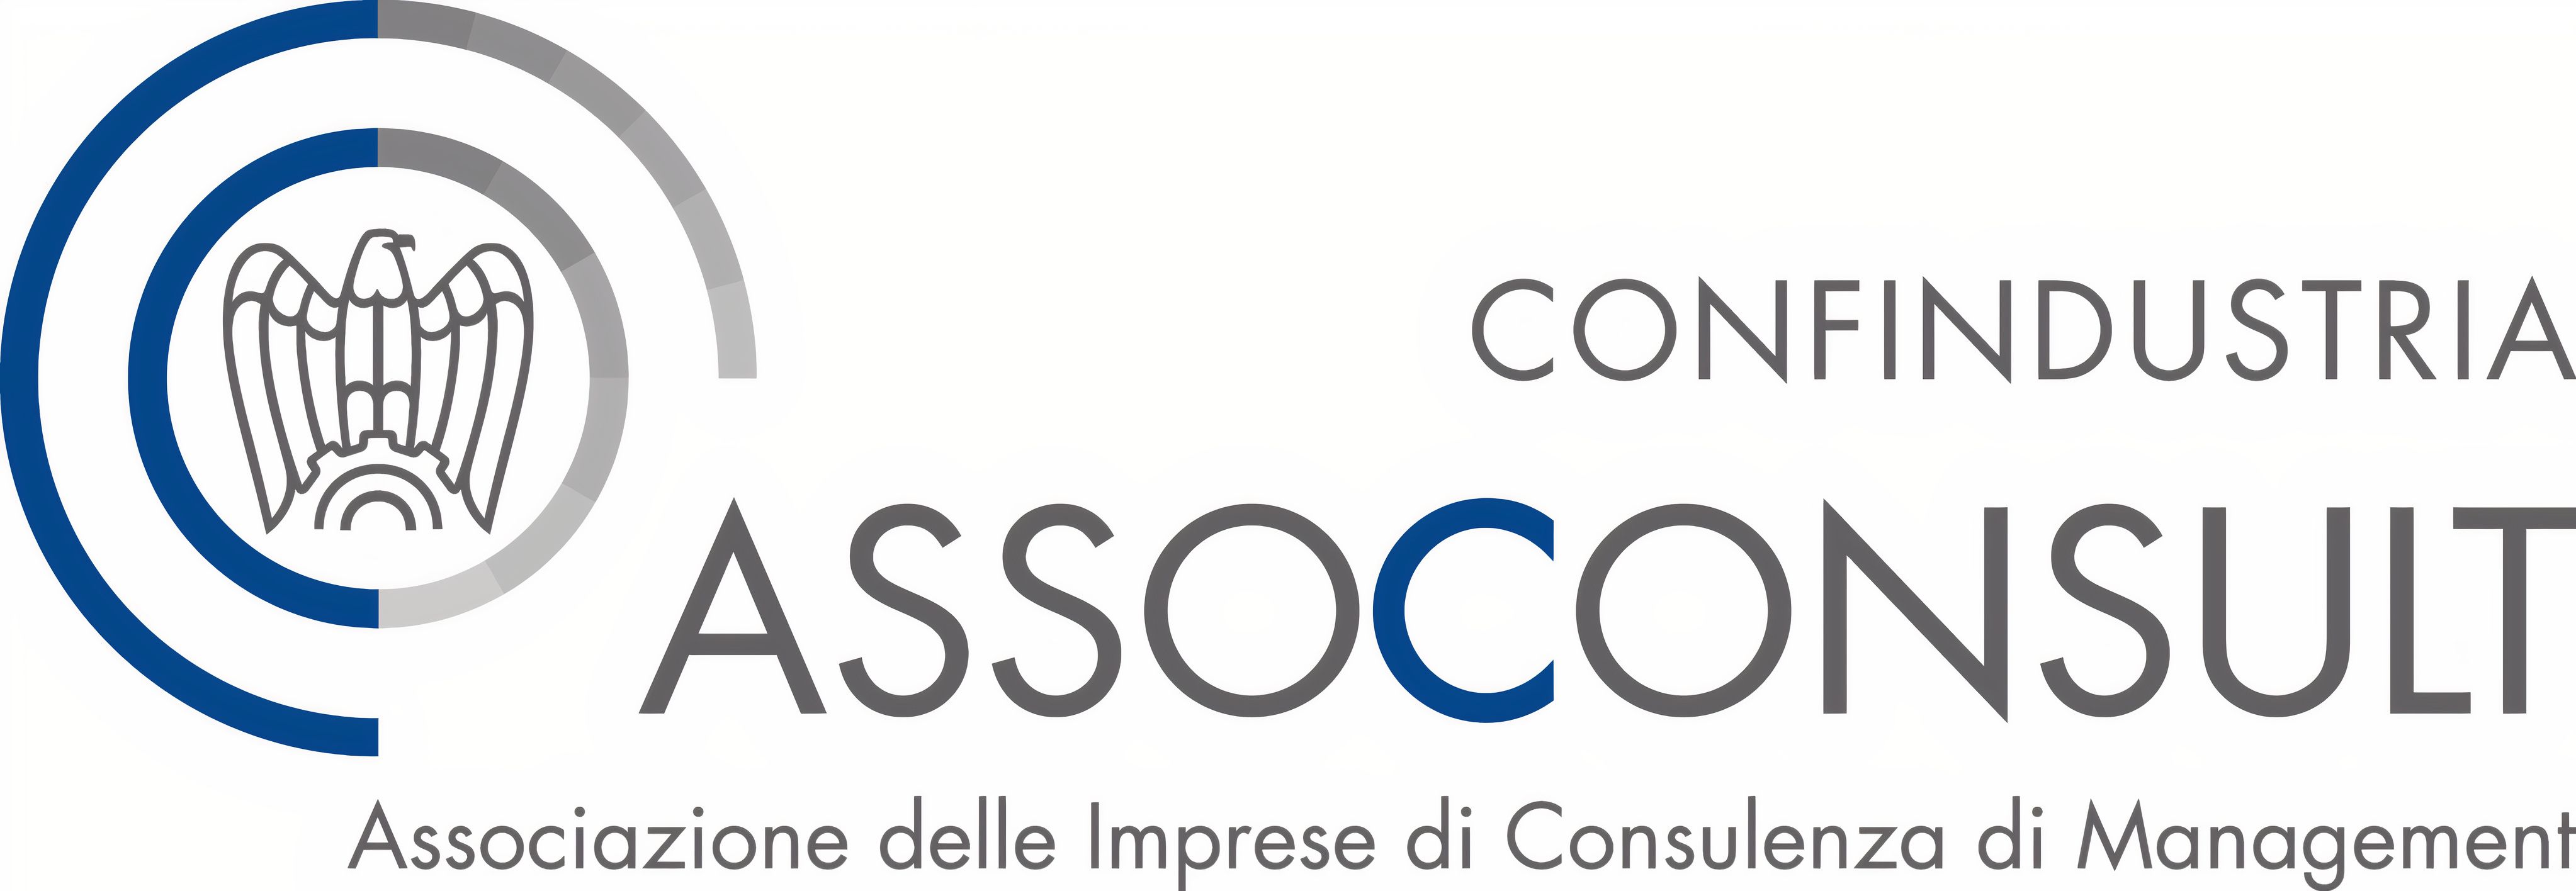 ASSOCONSULT logo